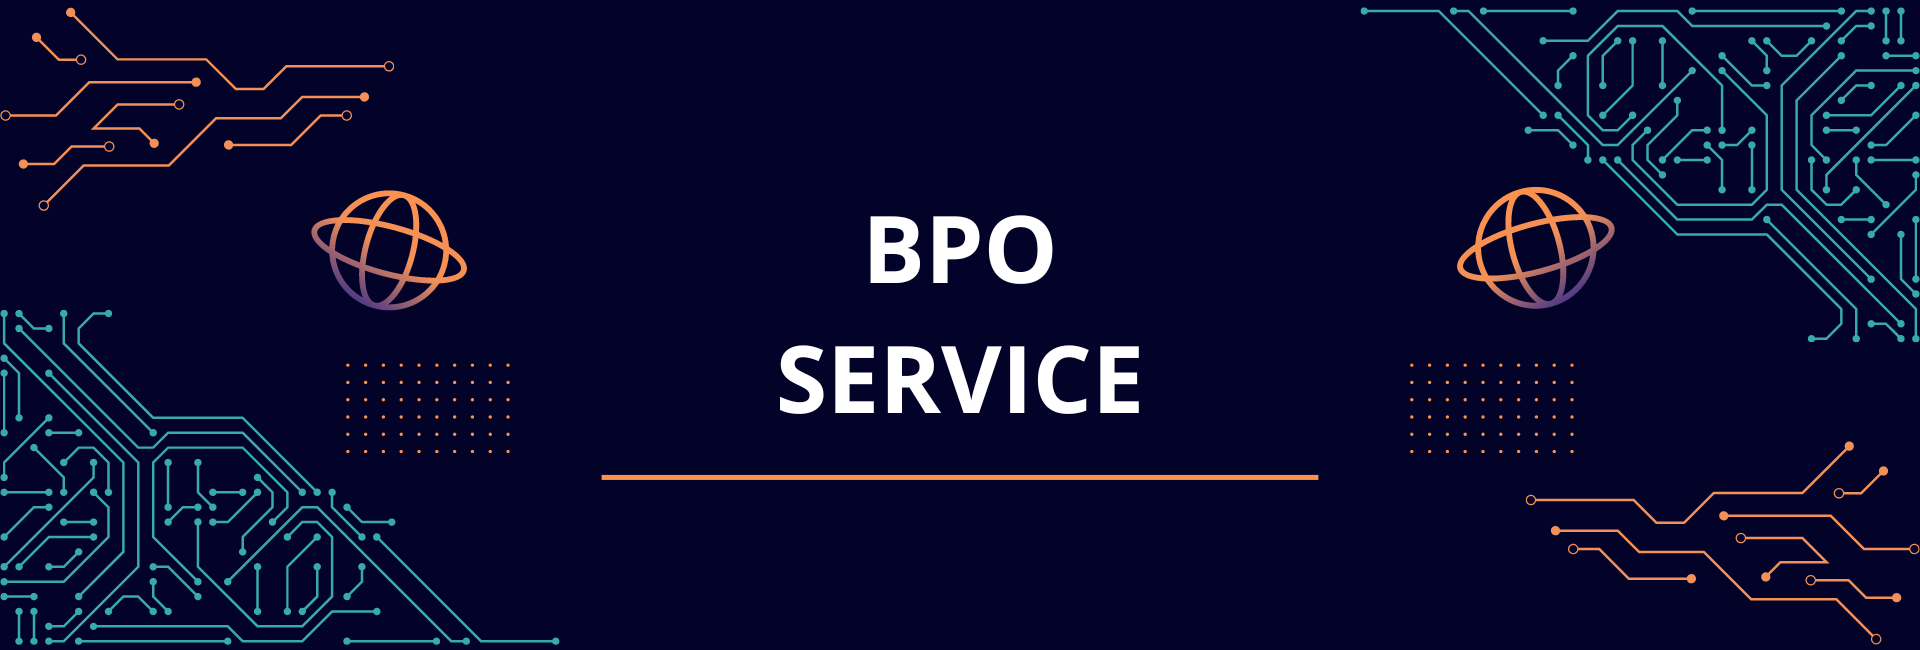 bpo-service